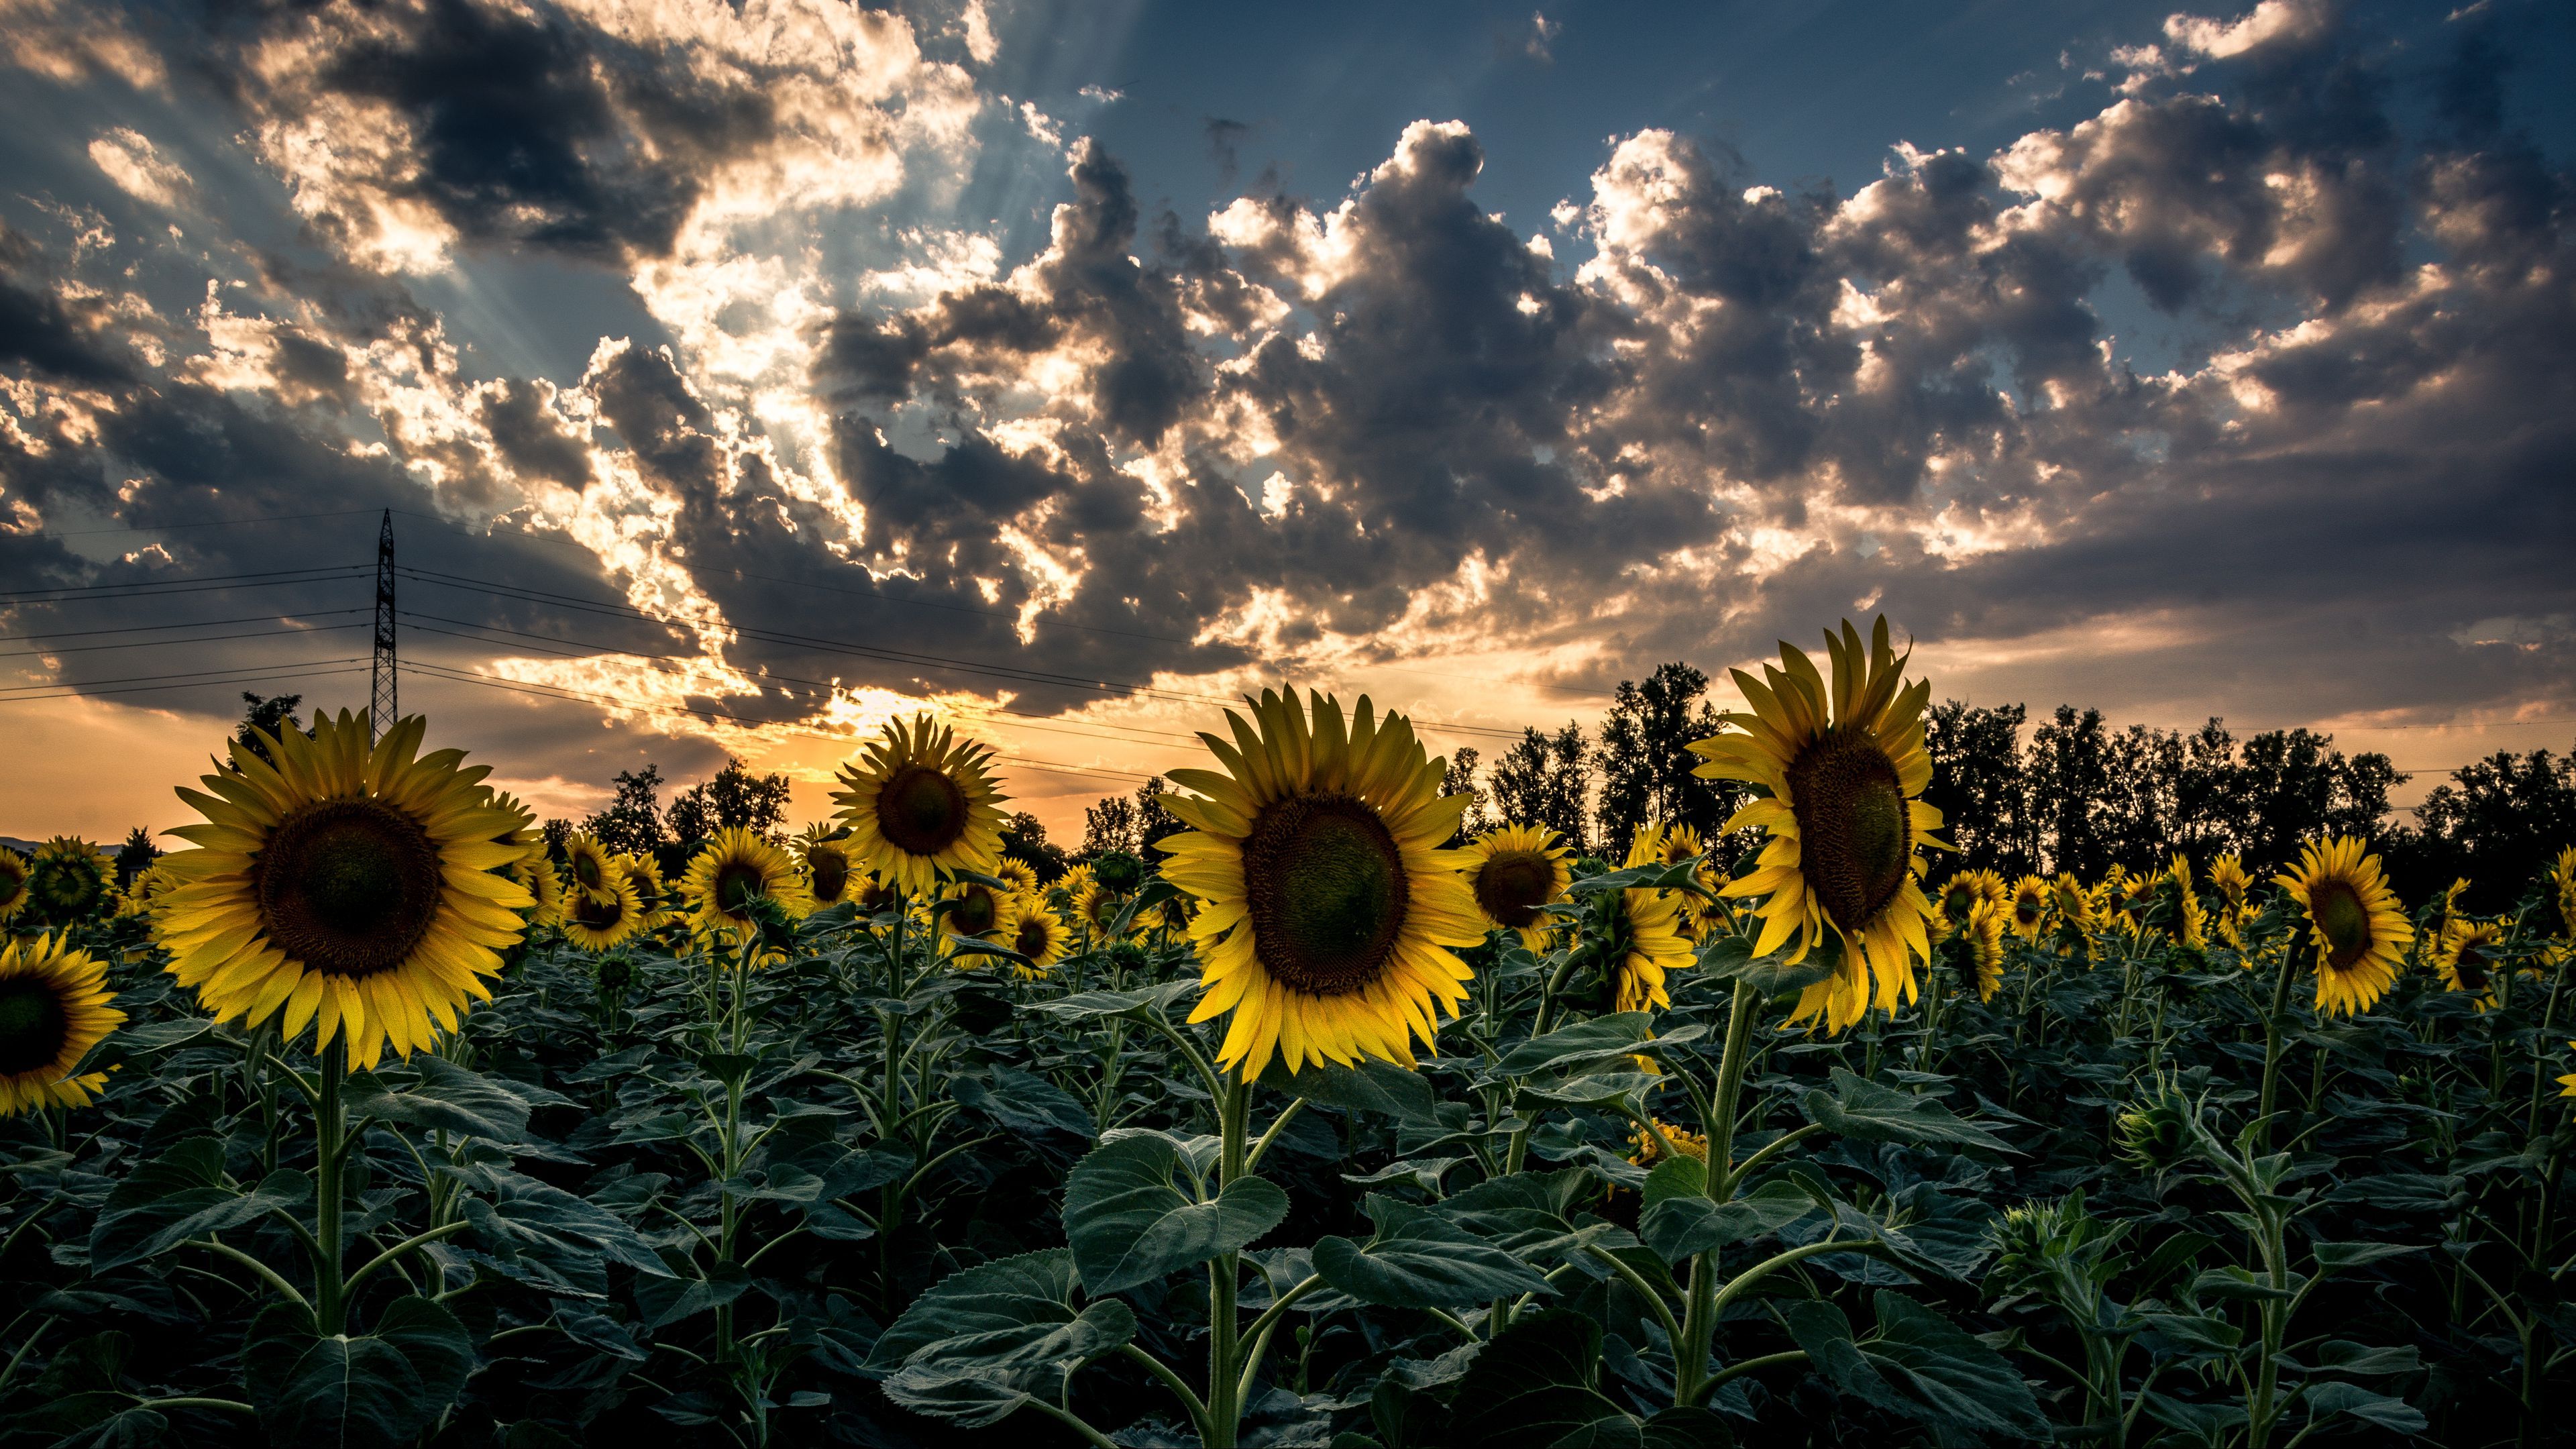 Download wallpaper 3840x2160 sunflower, field, flower, sunset 4k uhd 16:9 HD background